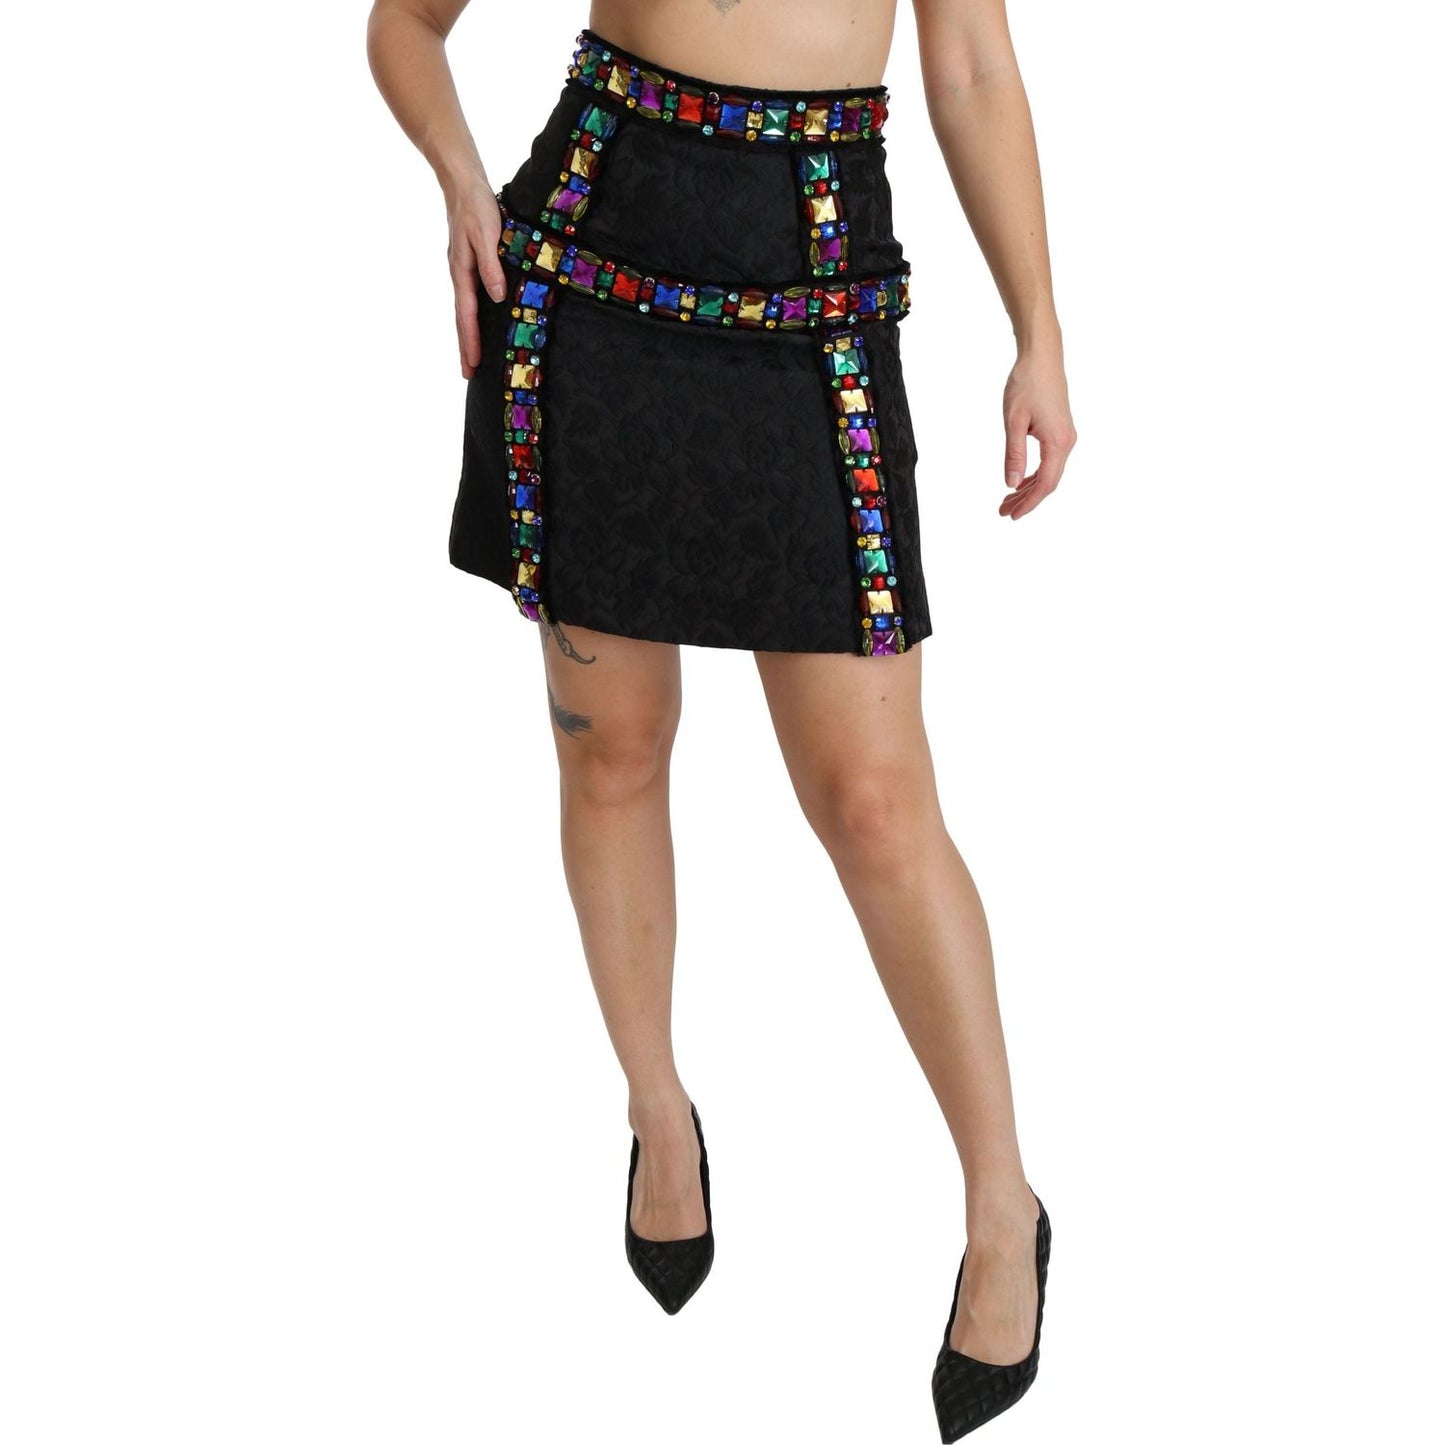 Dolce & Gabbana Elegant High-Waist Embellished Black Skirt black-crystal-embellished-high-waist-skirt